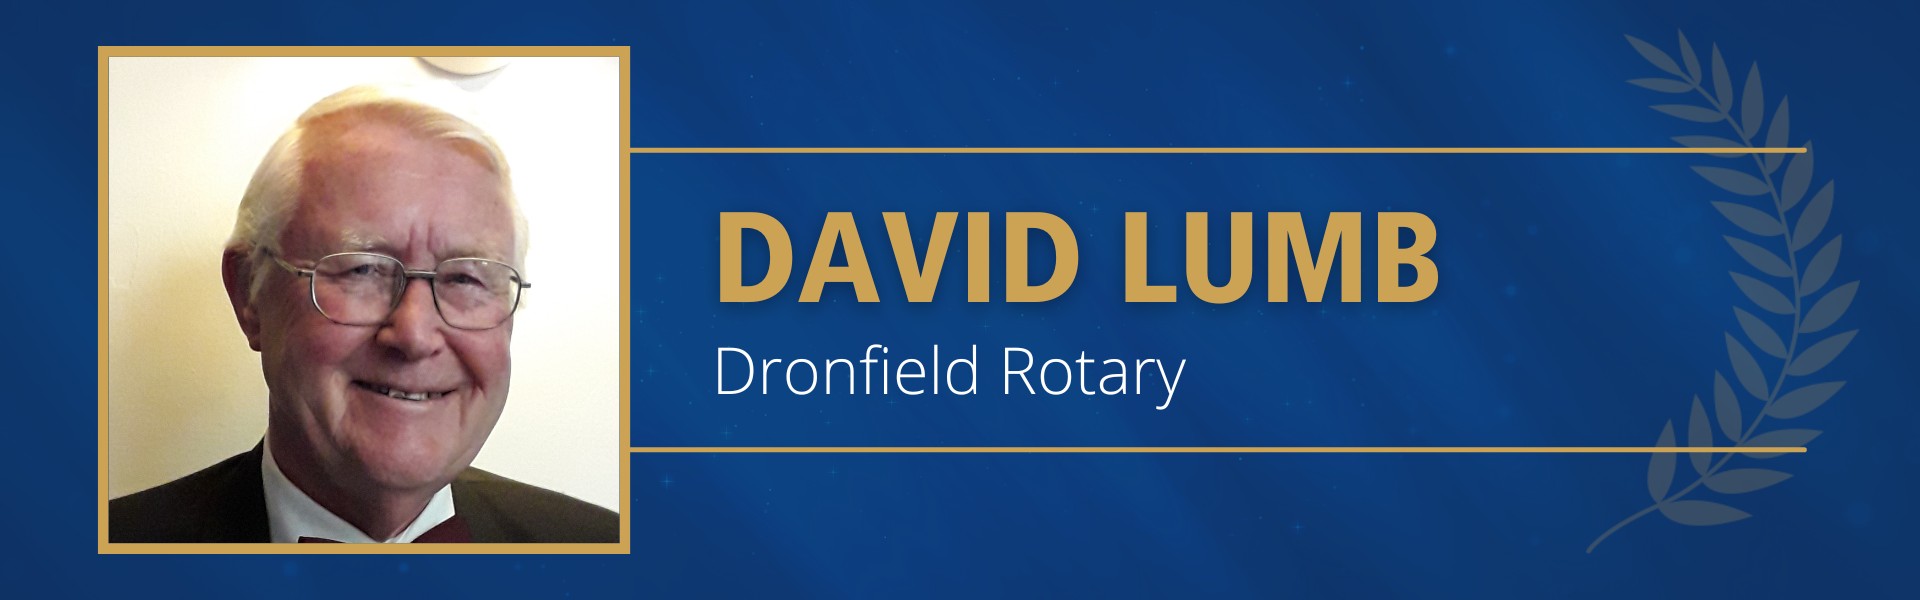 David Lumb Dronfield Rotary